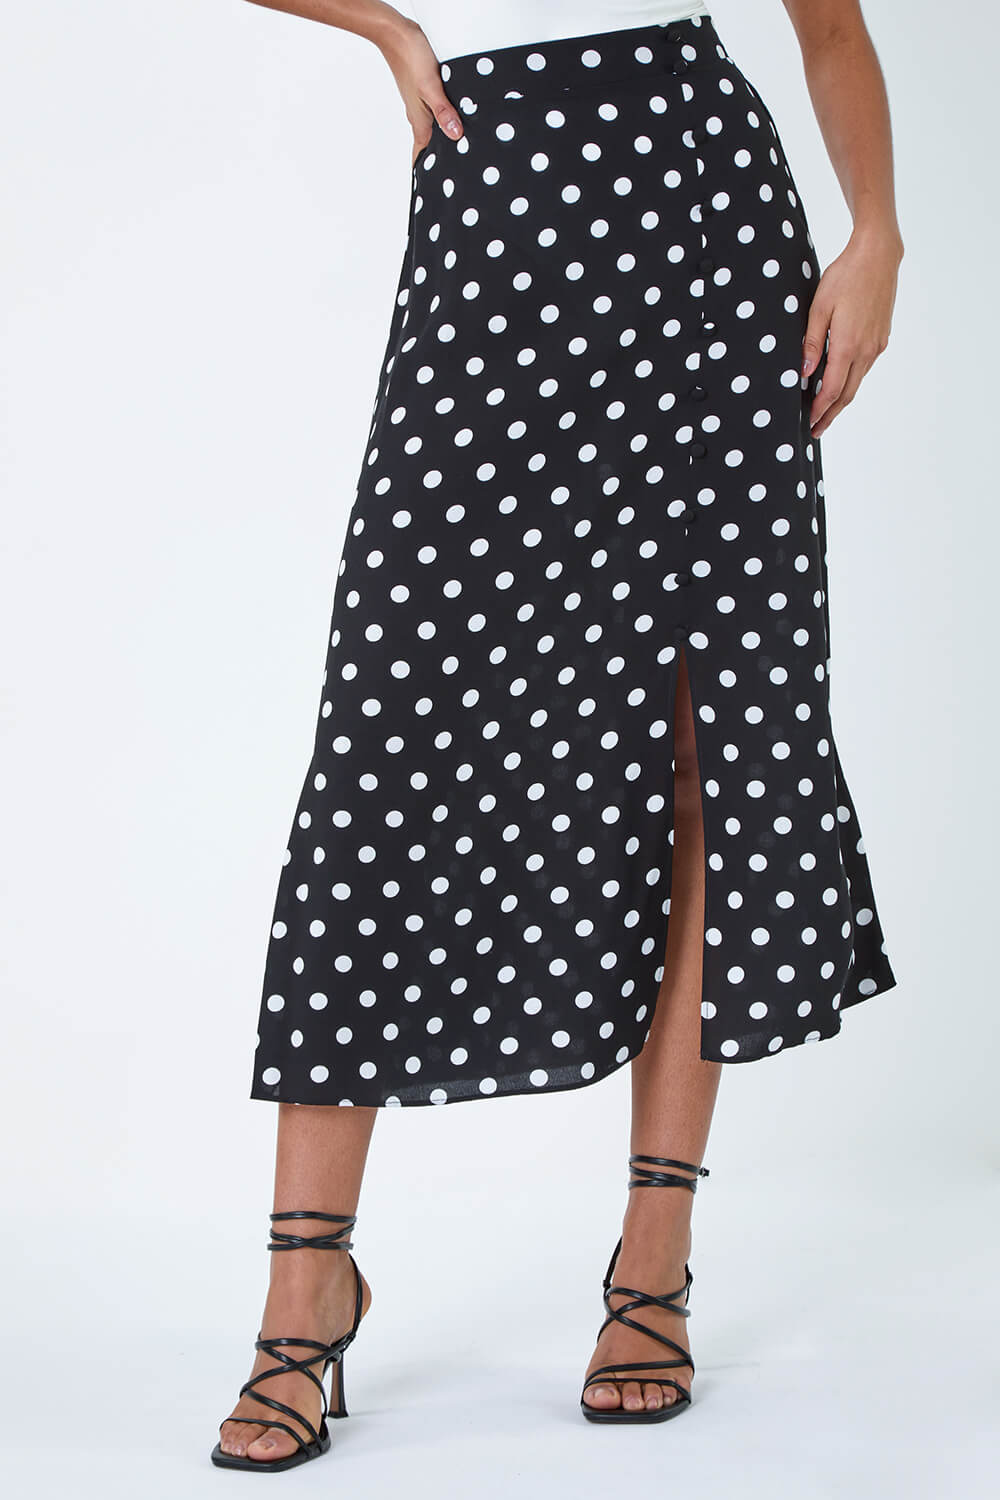 Black Polka Dot Button Detail Midi Skirt, Image 4 of 5